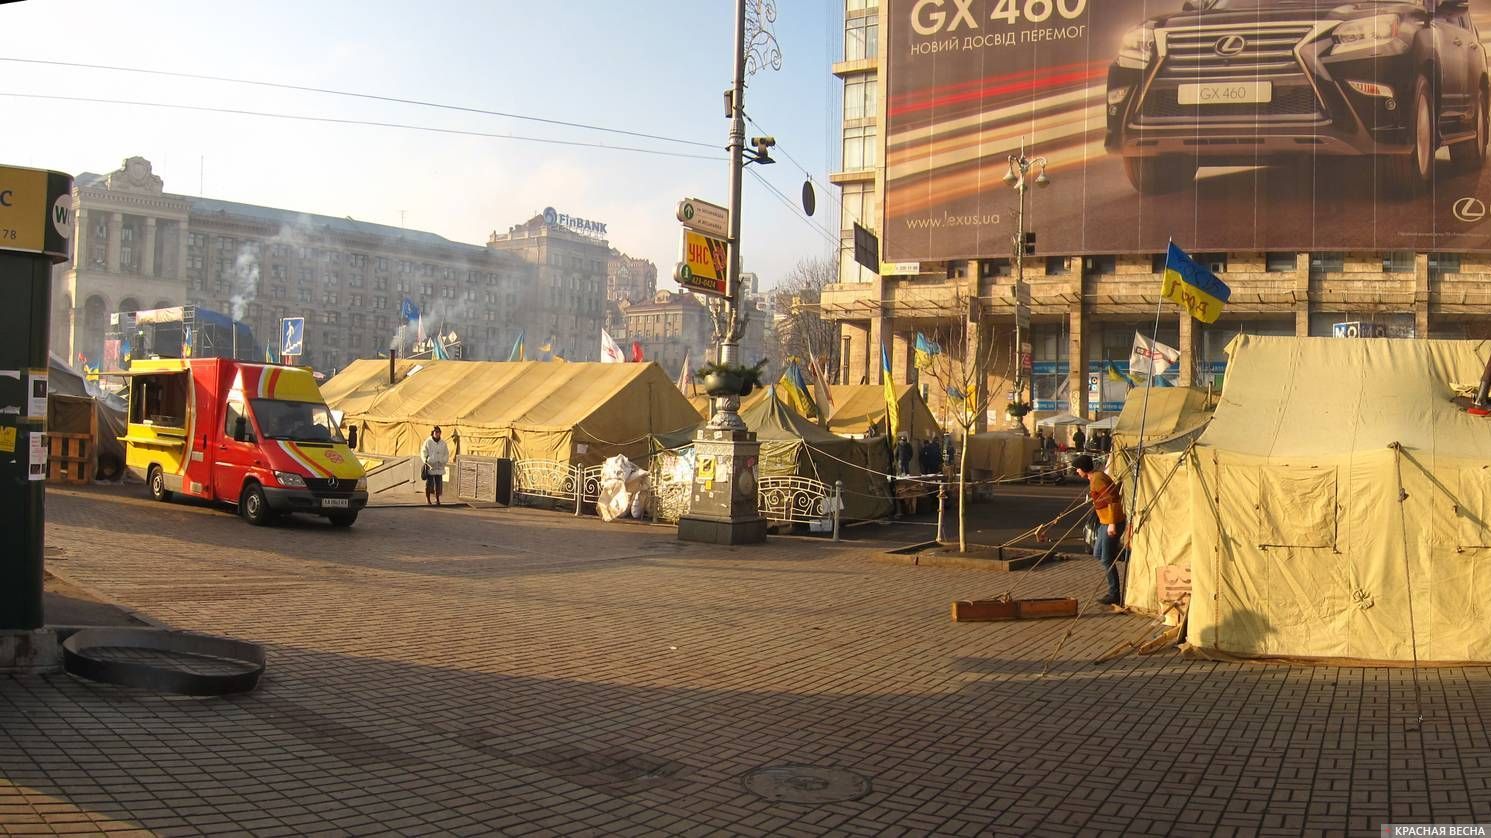 Майдан Независимости. Киев. 29.12.2013